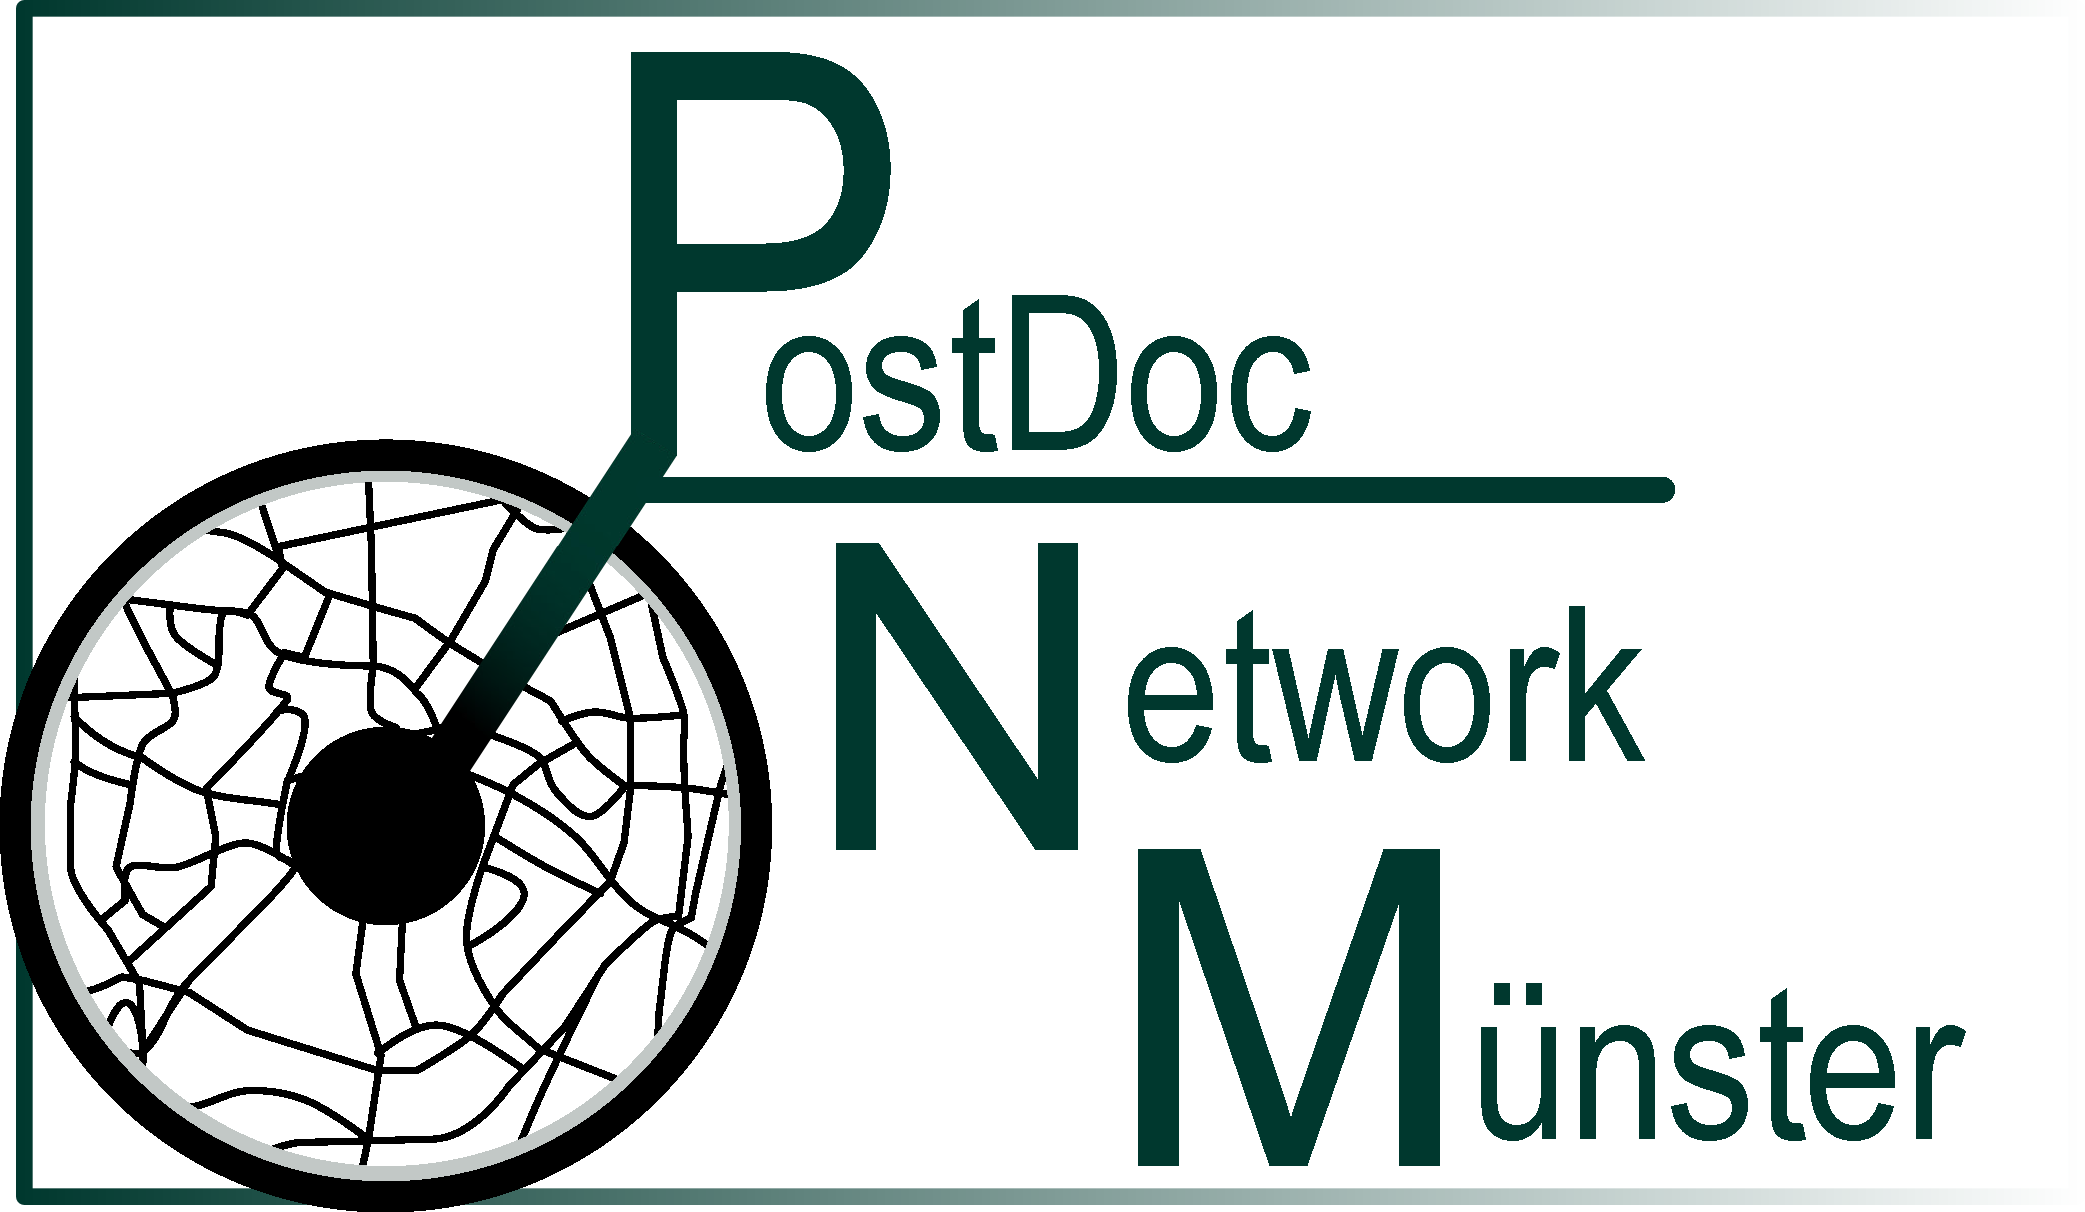 Postdoc Network Münster